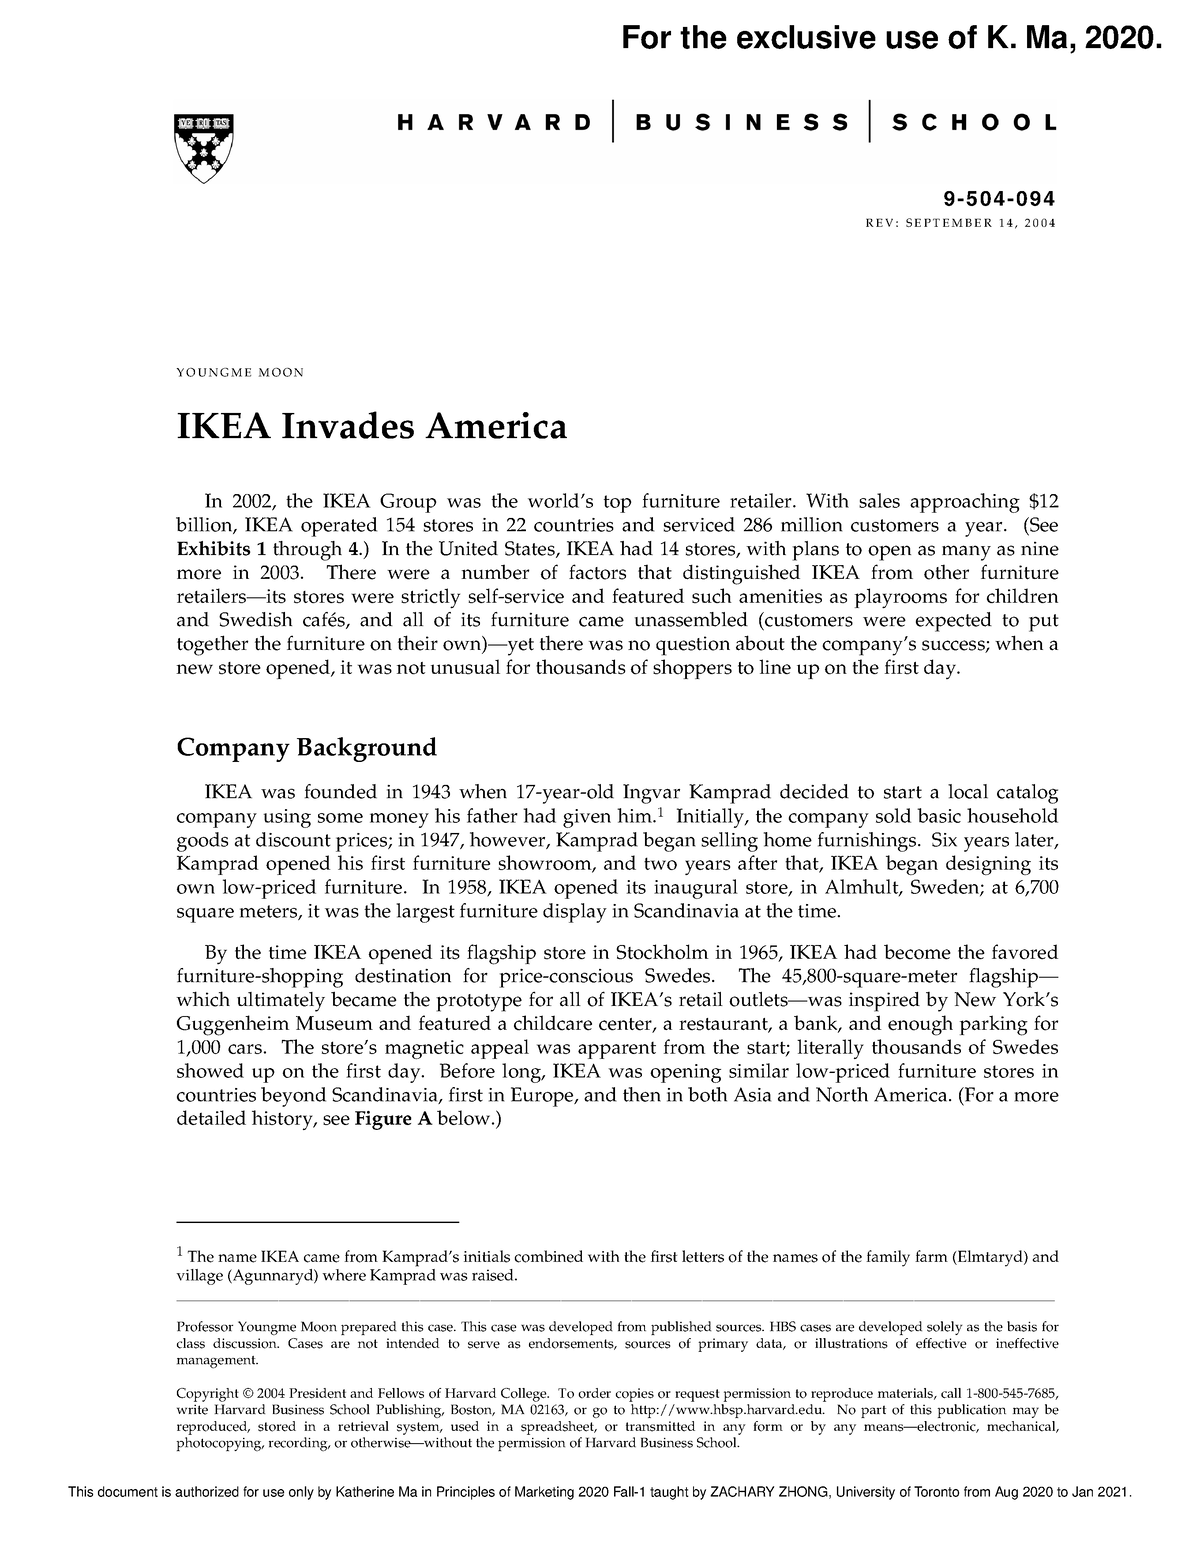 ikea invades america case study pdf